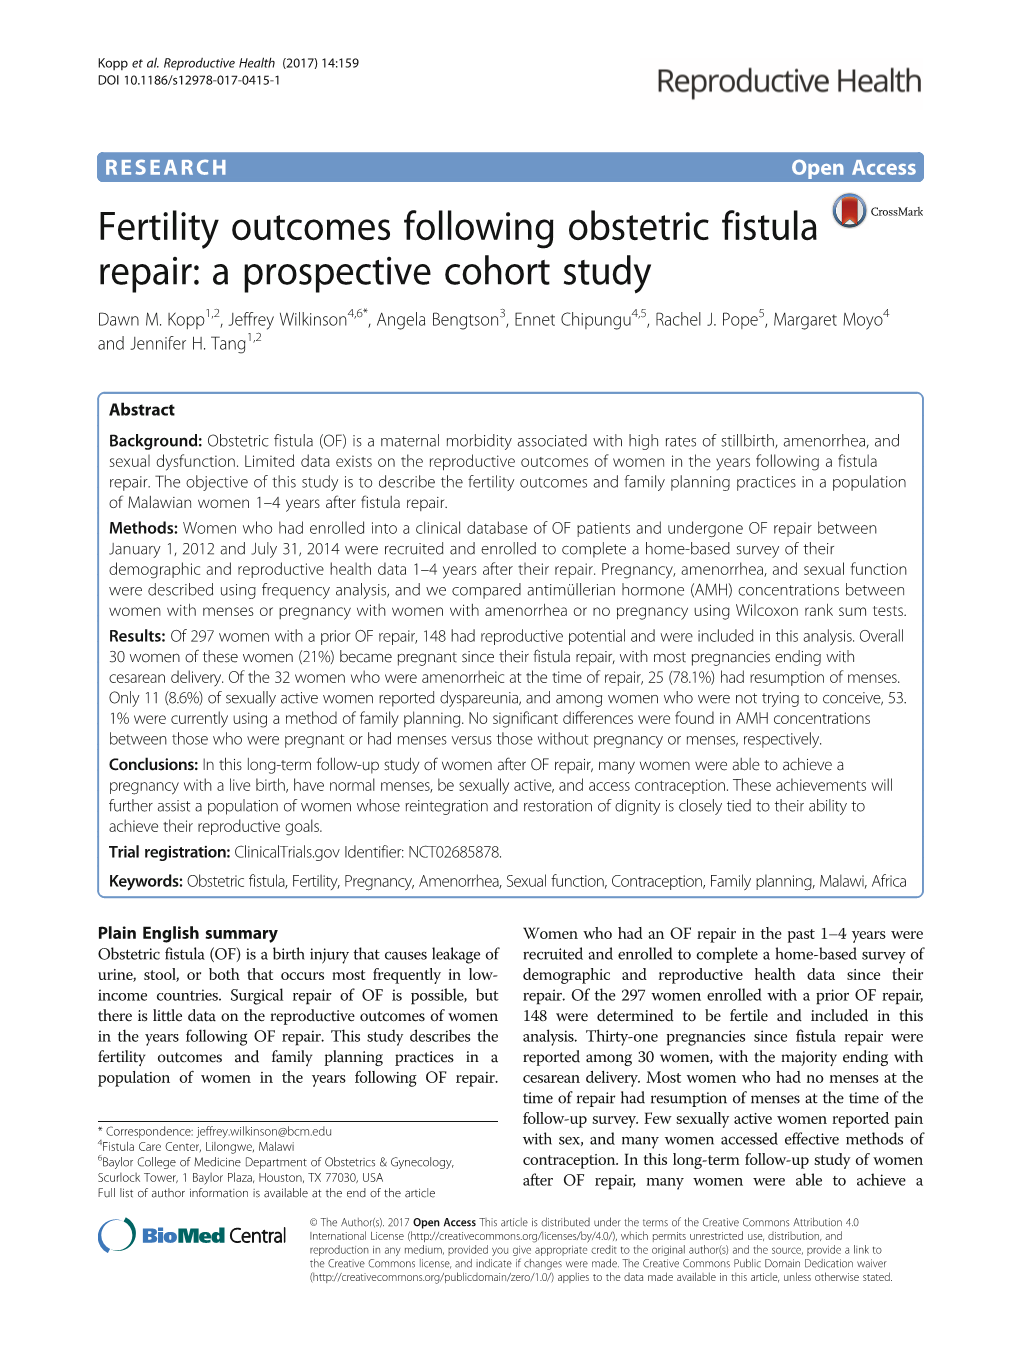 Fertility Outcomes Following Obstetric Fistula Repair: a Prospective Cohort Study Dawn M